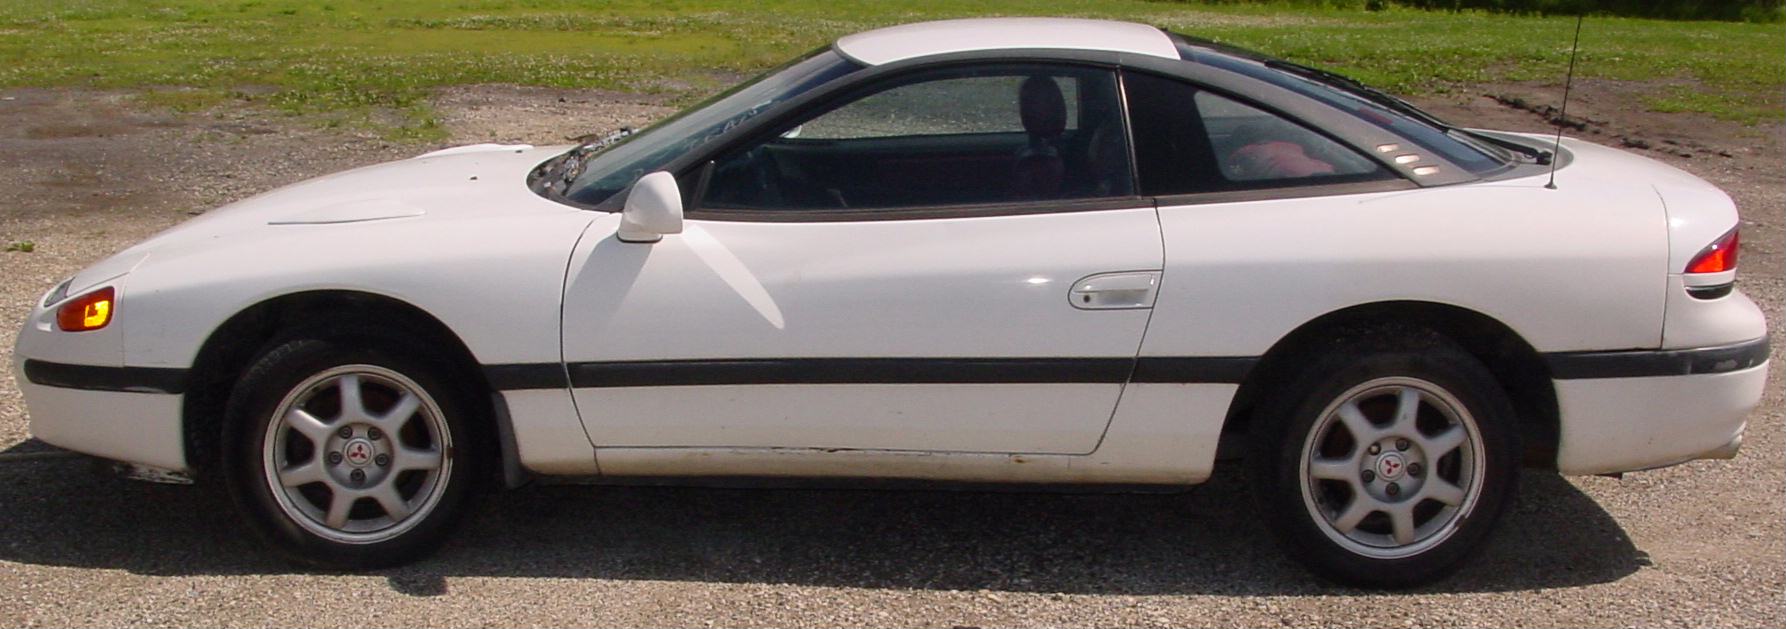 Dodge Stealth 1991 #8